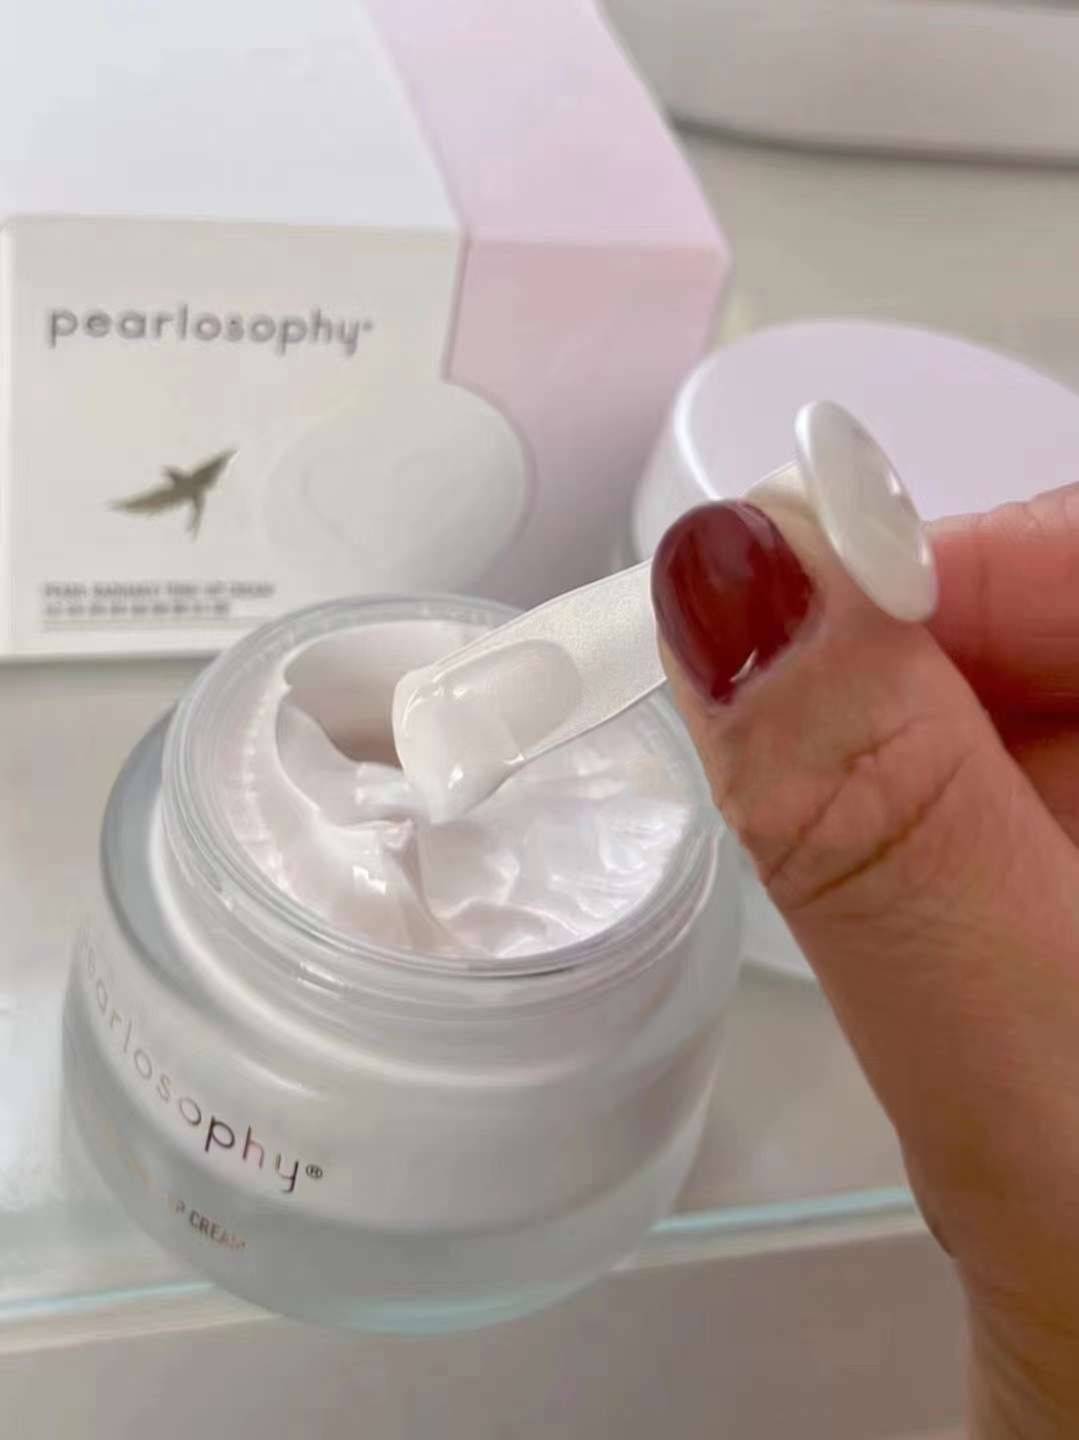 Pearlosophy Pearl & Bird's Nest Radiance Tone-Up Cream (50ml) - Best Buy World Singapore